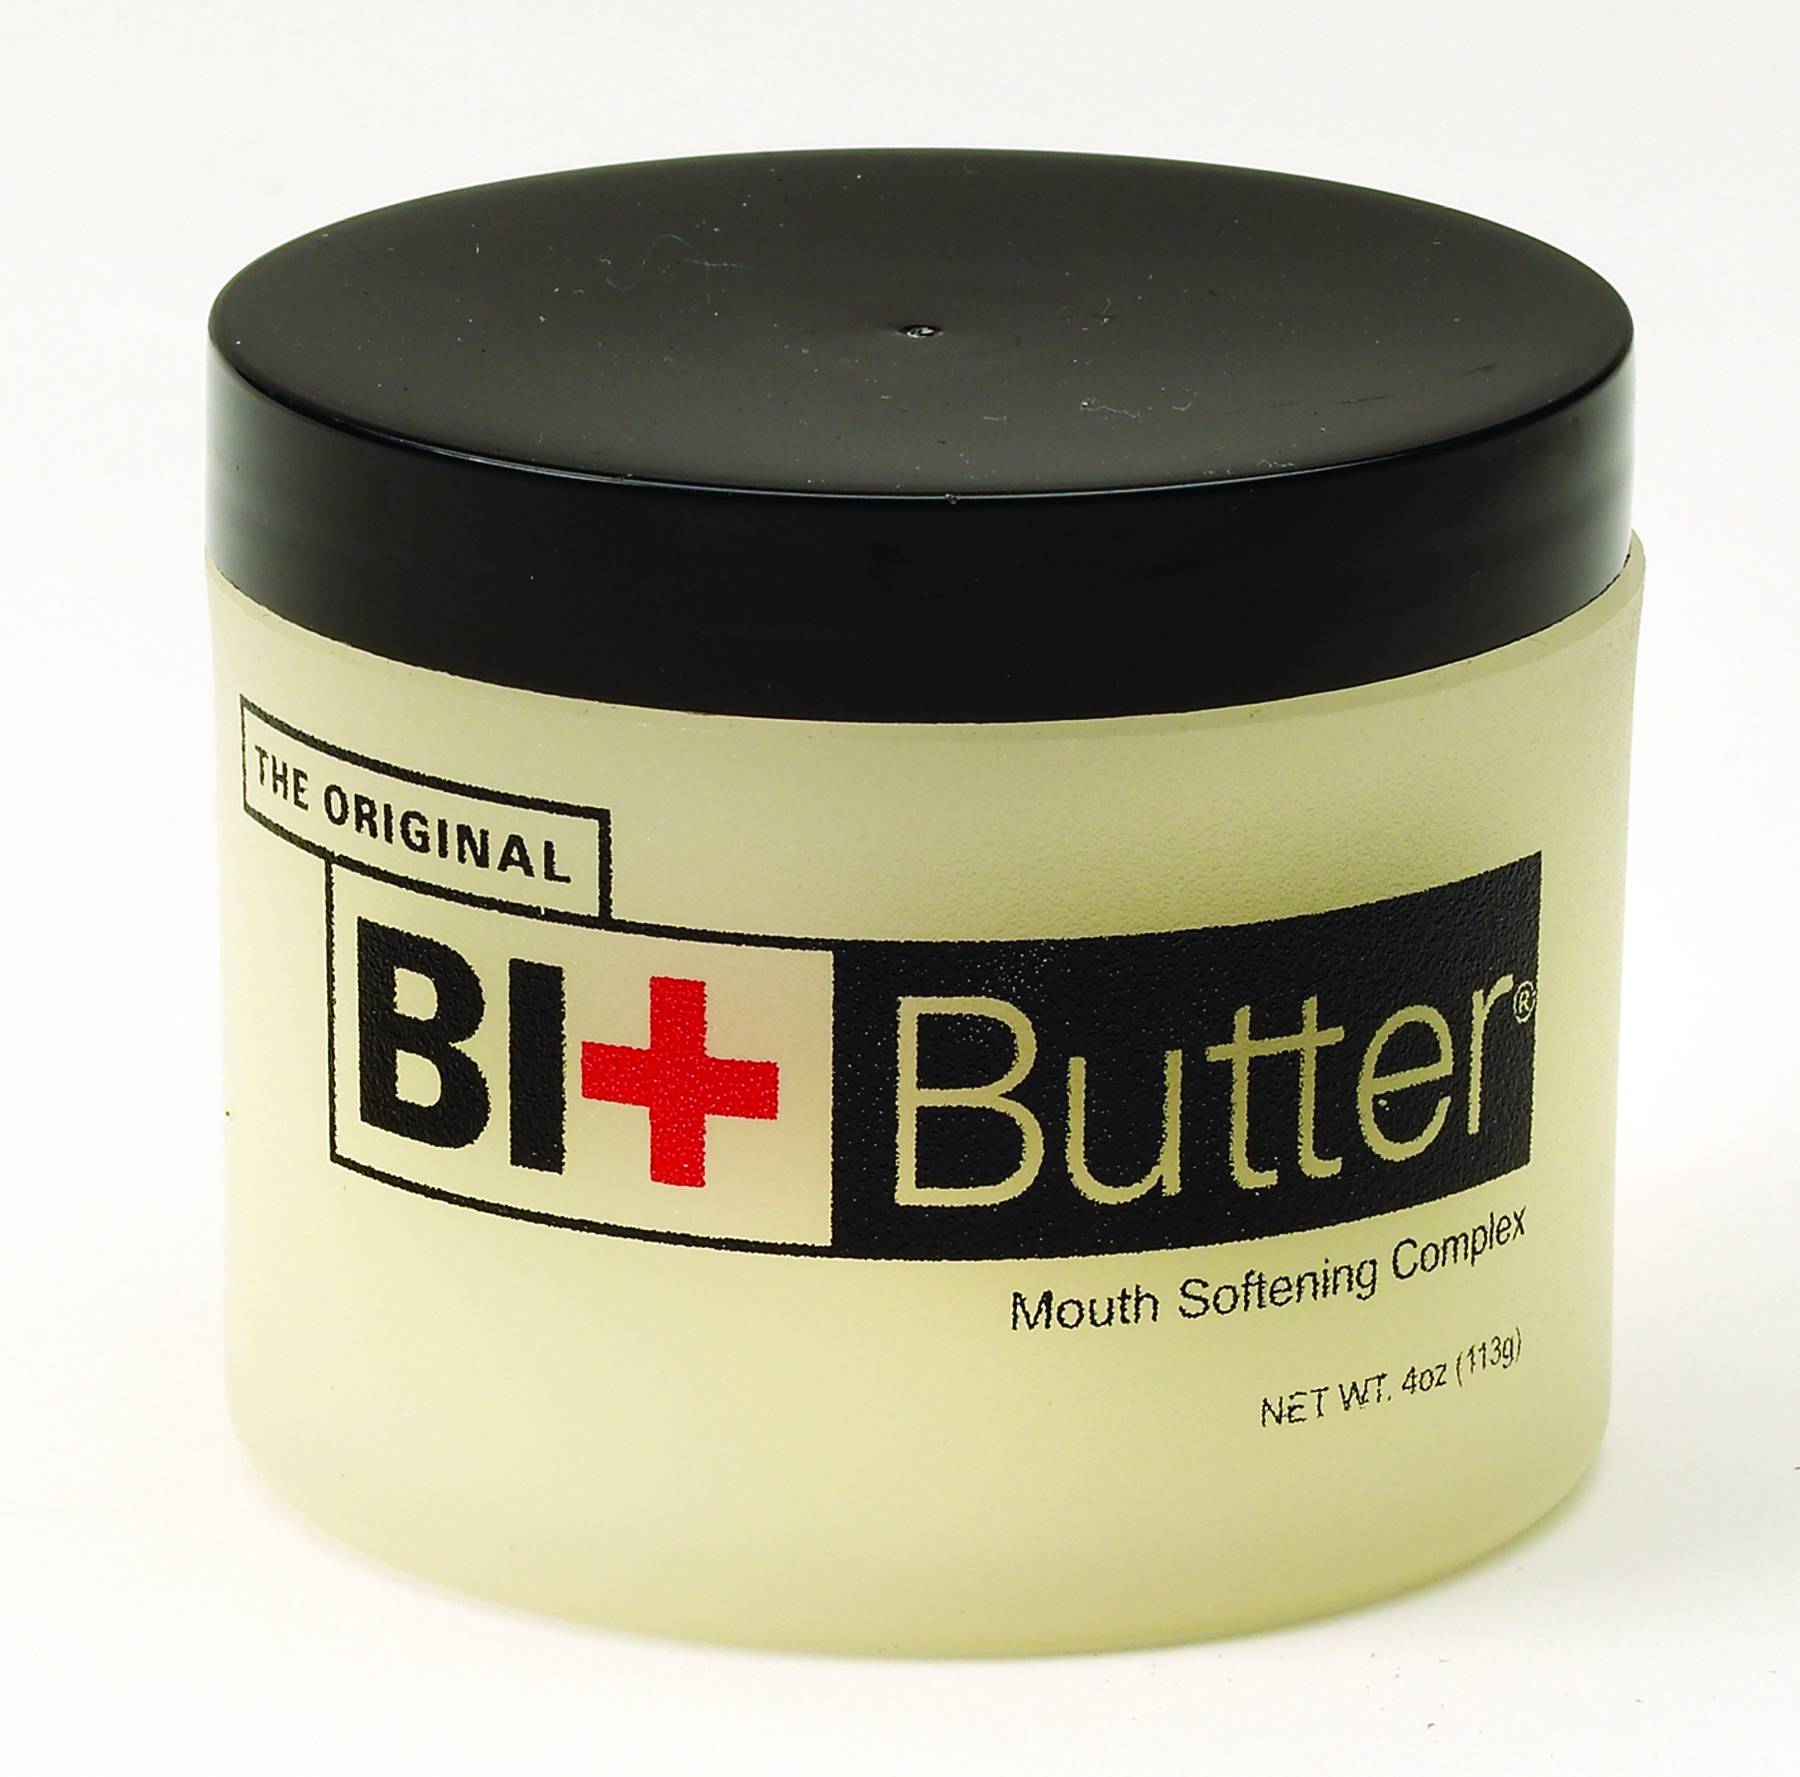 The Original Bit Butter - Mouth Softening Complex